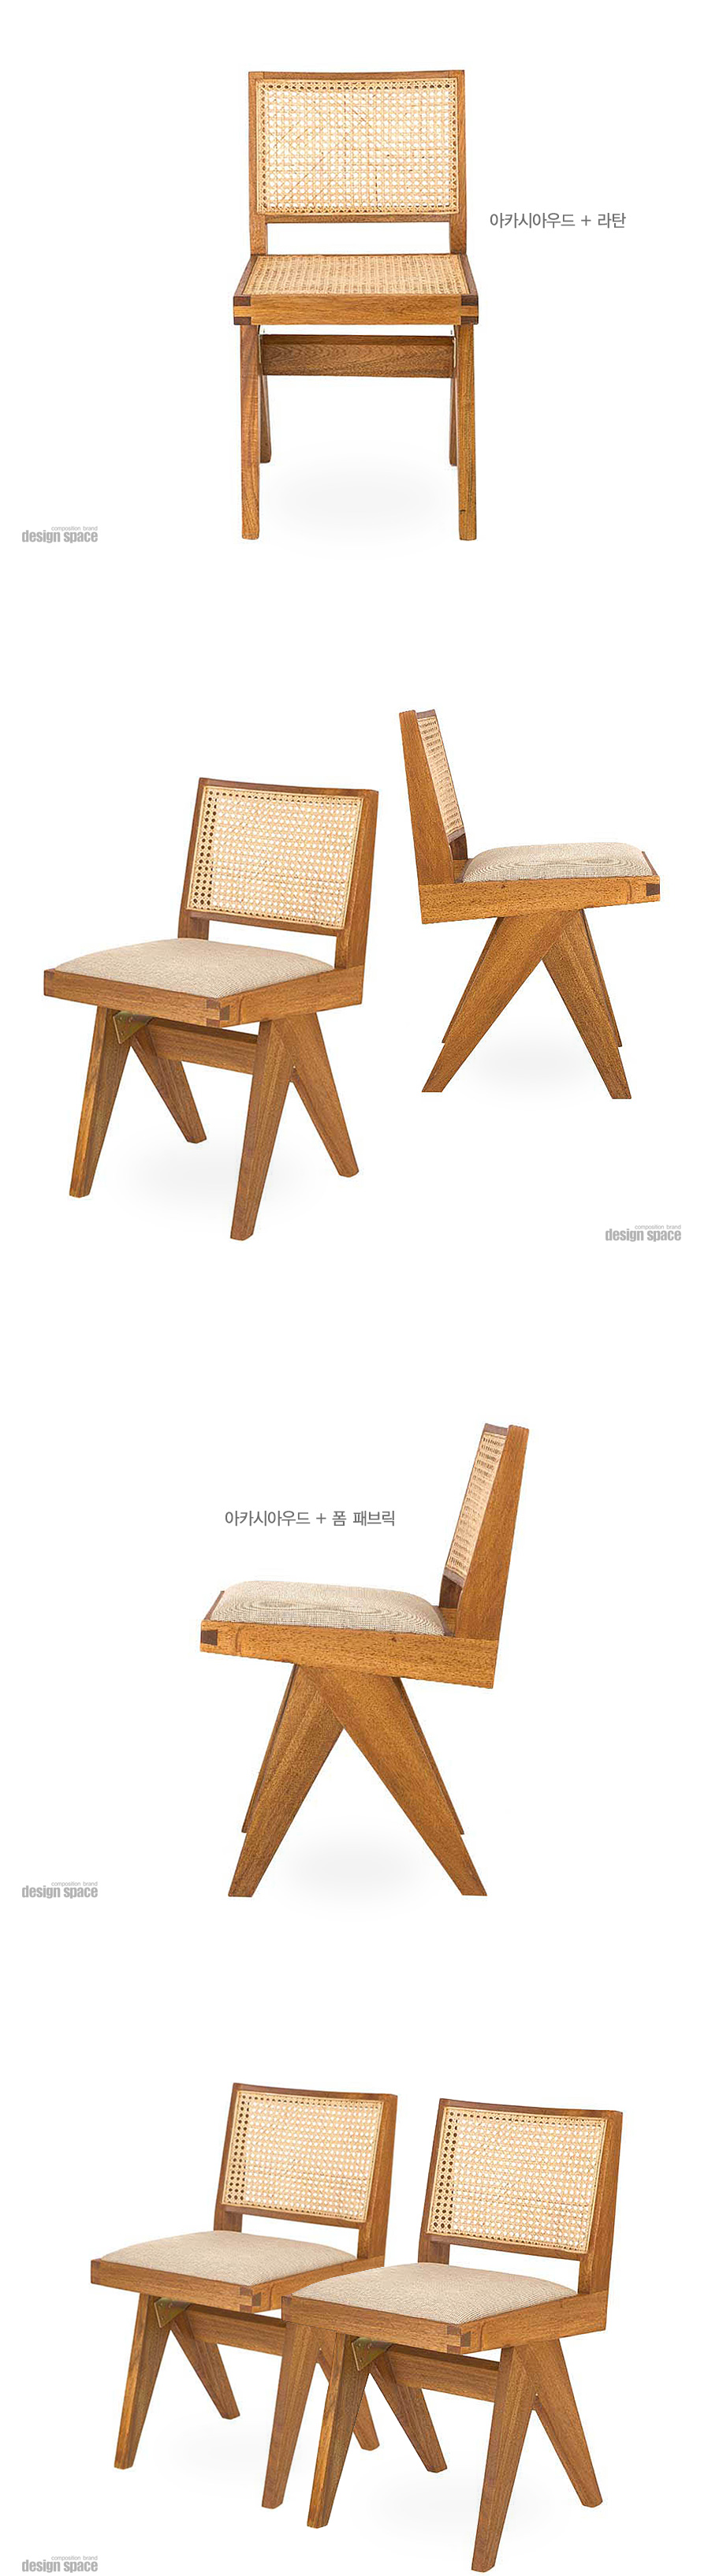 diana-side-chair(디아나-사이드체어)_02.jpg